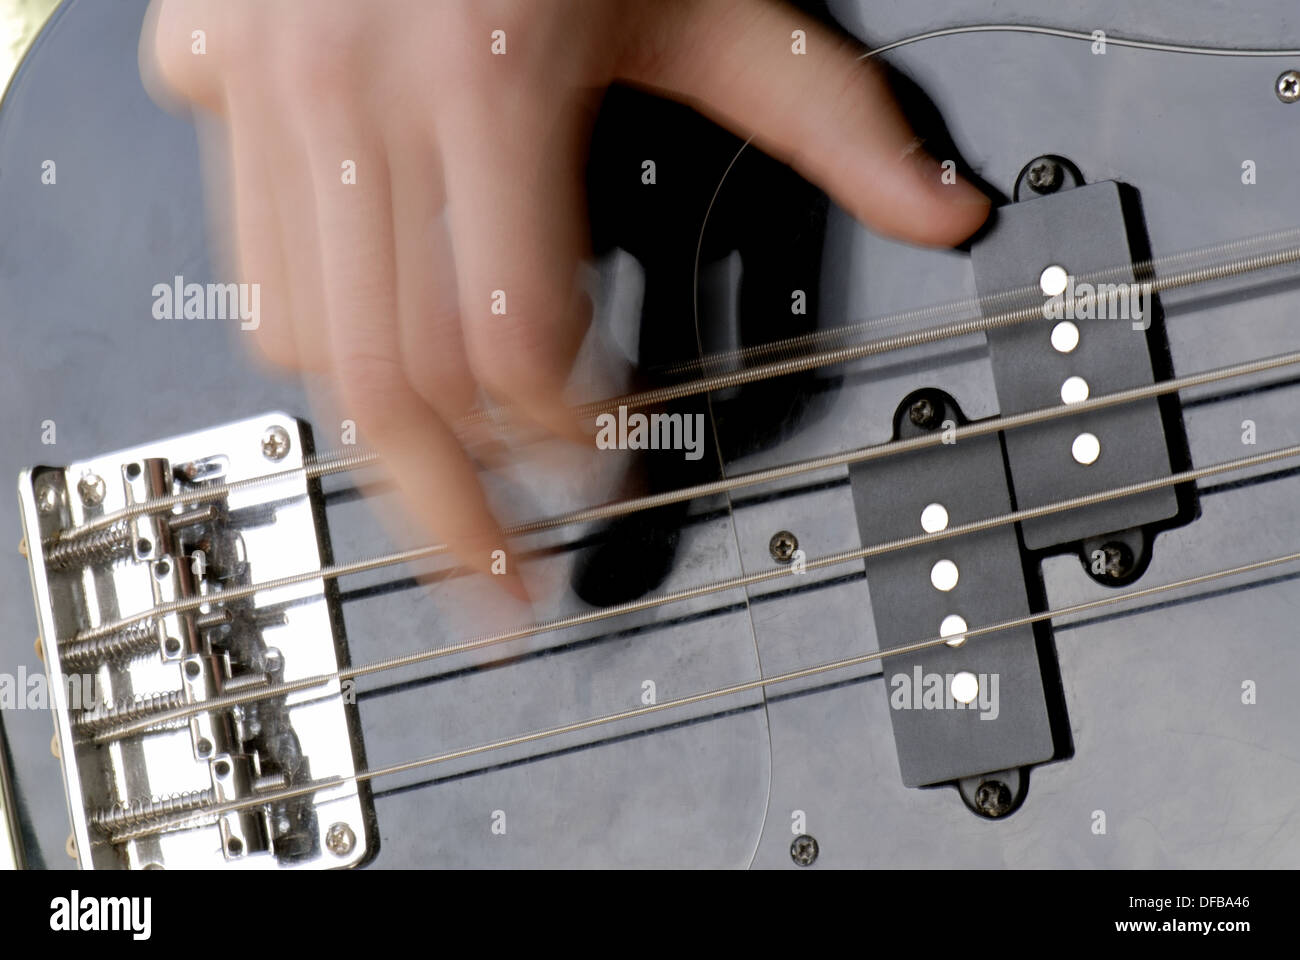 Hand playing bass guitar Stock Photo